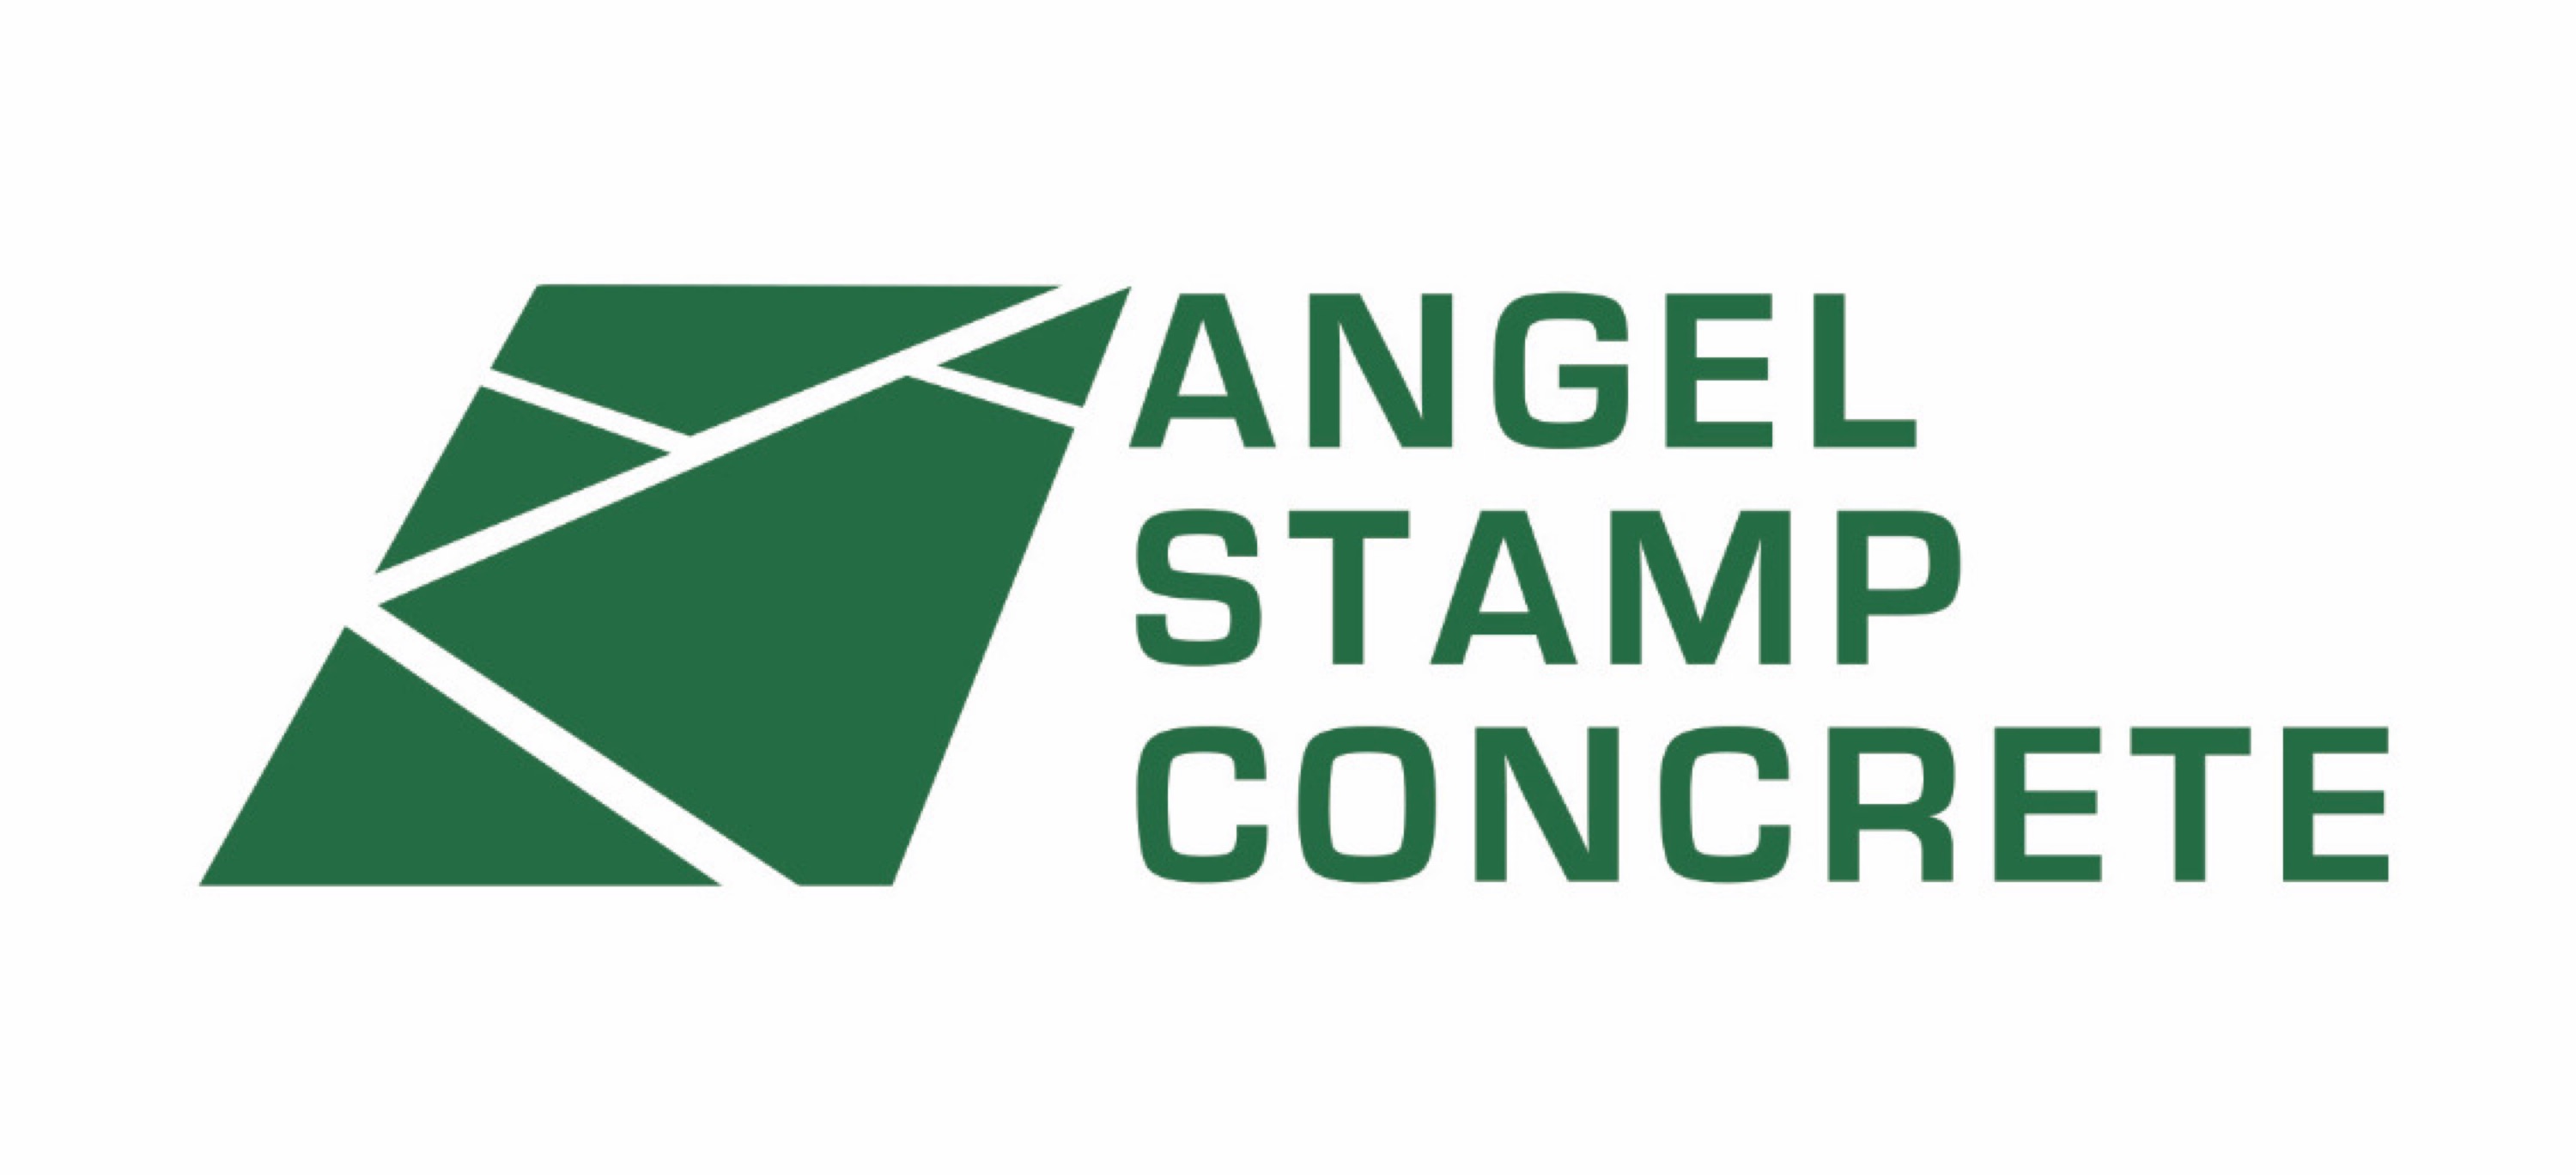 Angel Stamp Concrete Corporation Logo